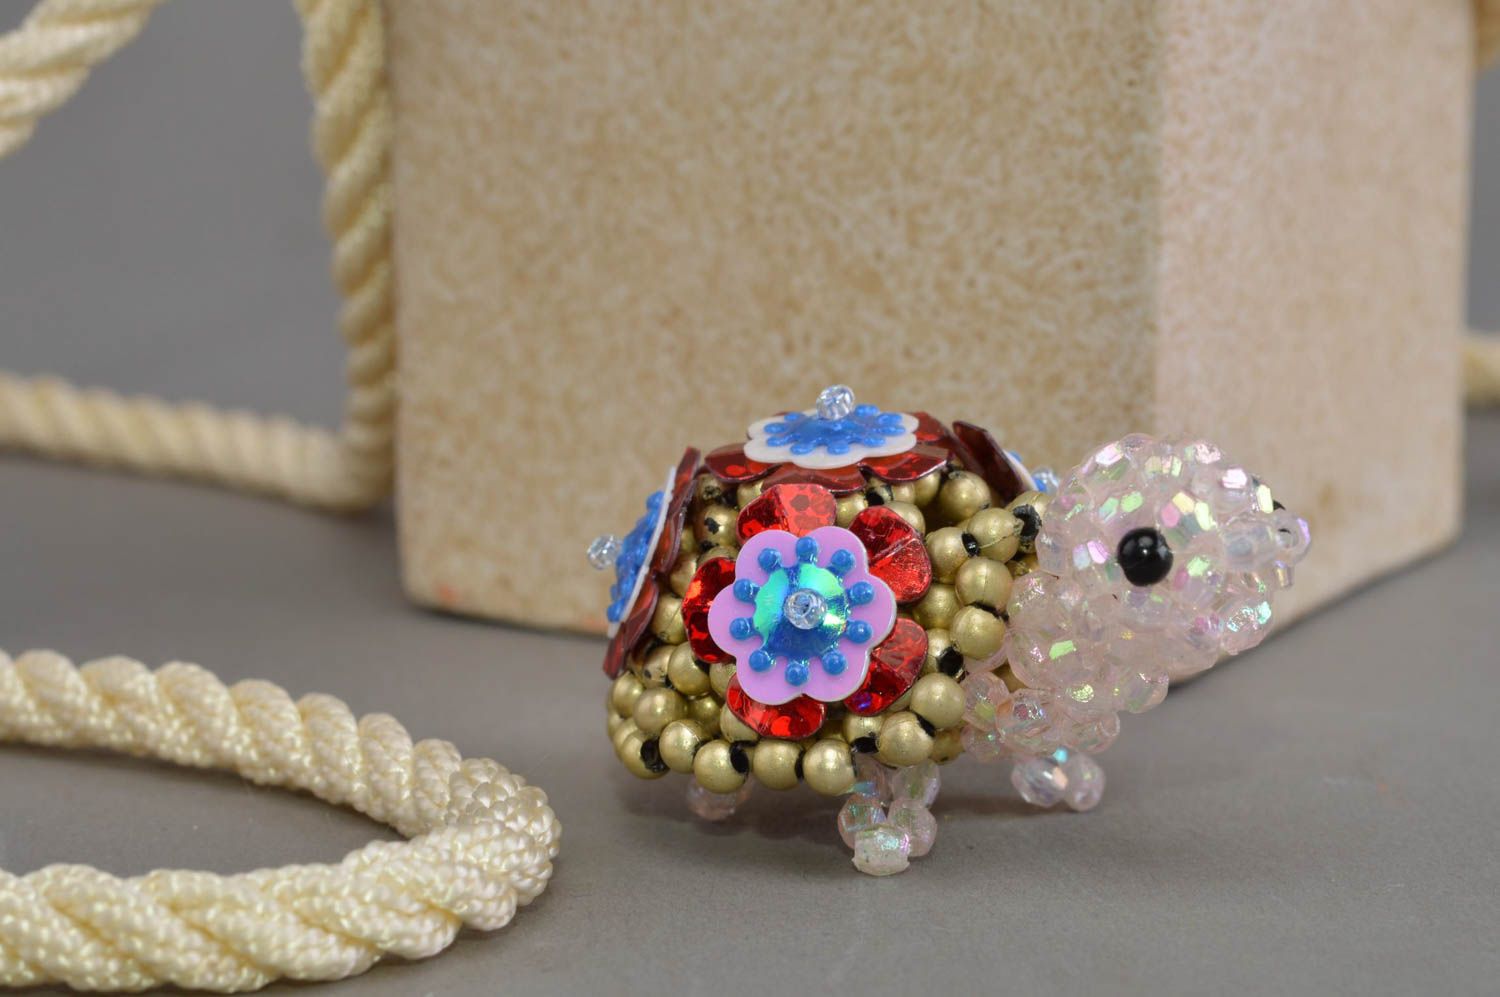 Handmade designer miniature bead woven figurine of turtle with flowers on armor photo 1